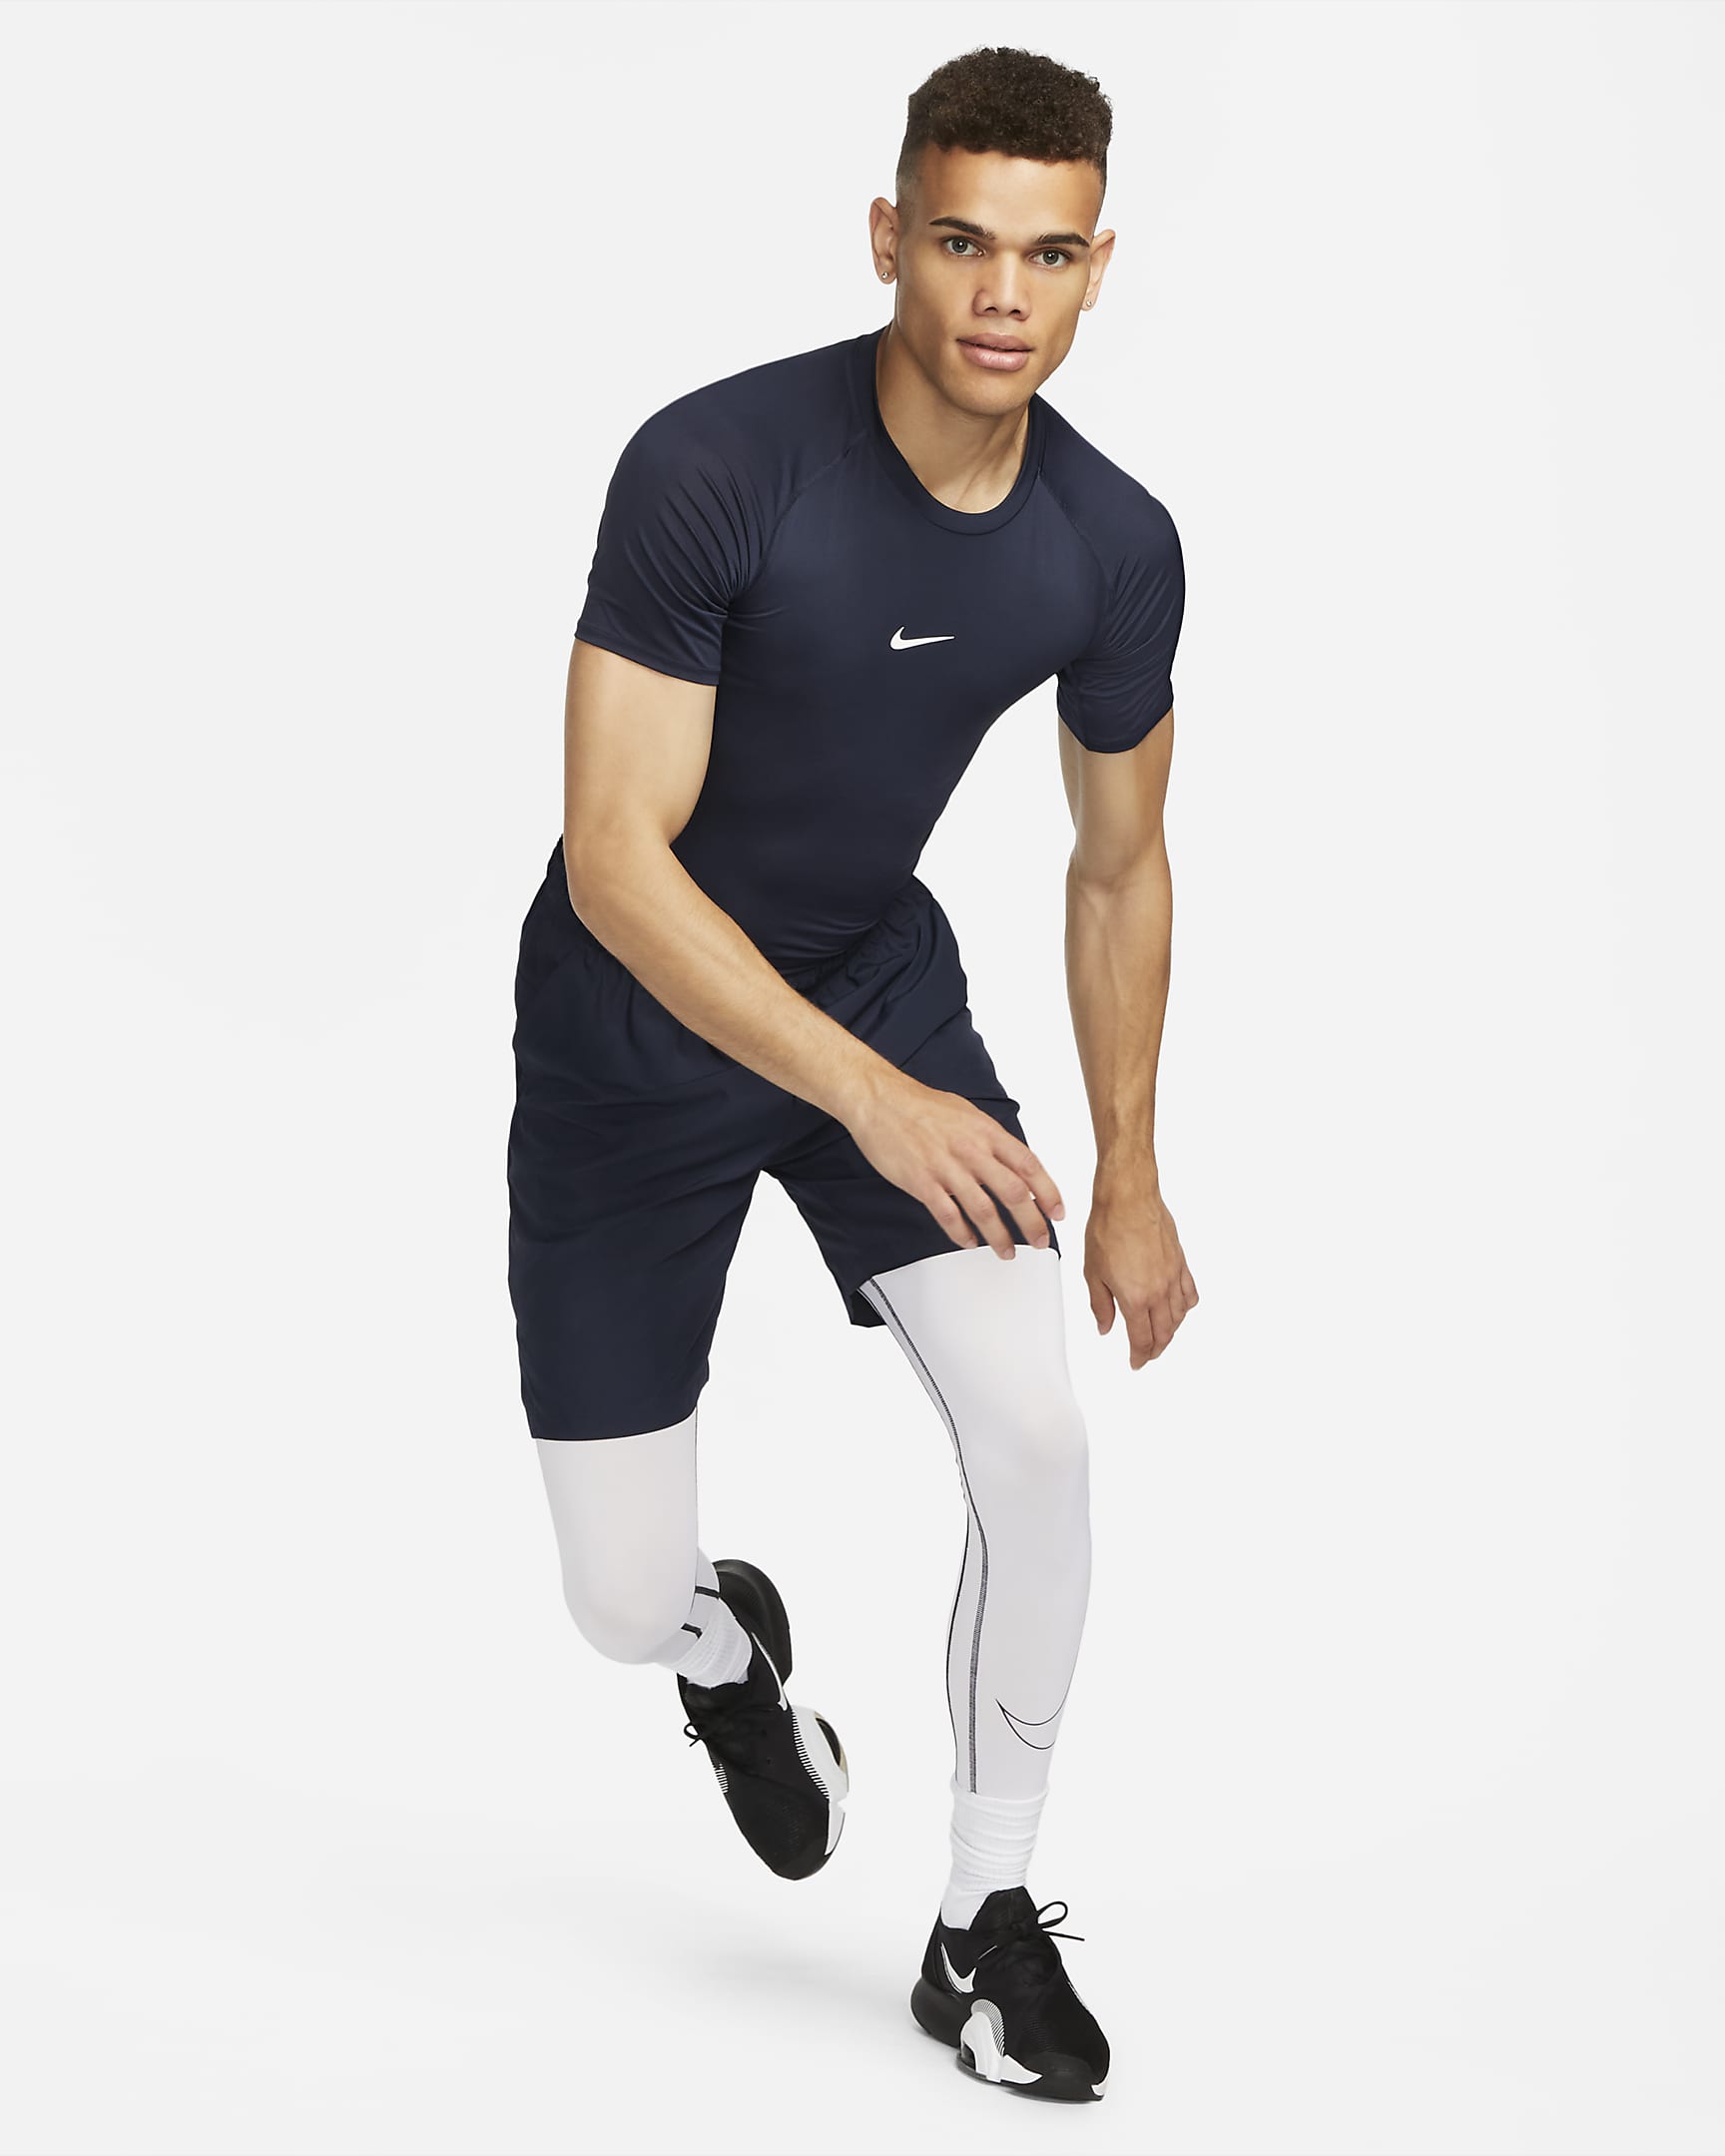 Nike Pro Men's Dri-FIT Tight Short-Sleeve Fitness Top. Nike HR